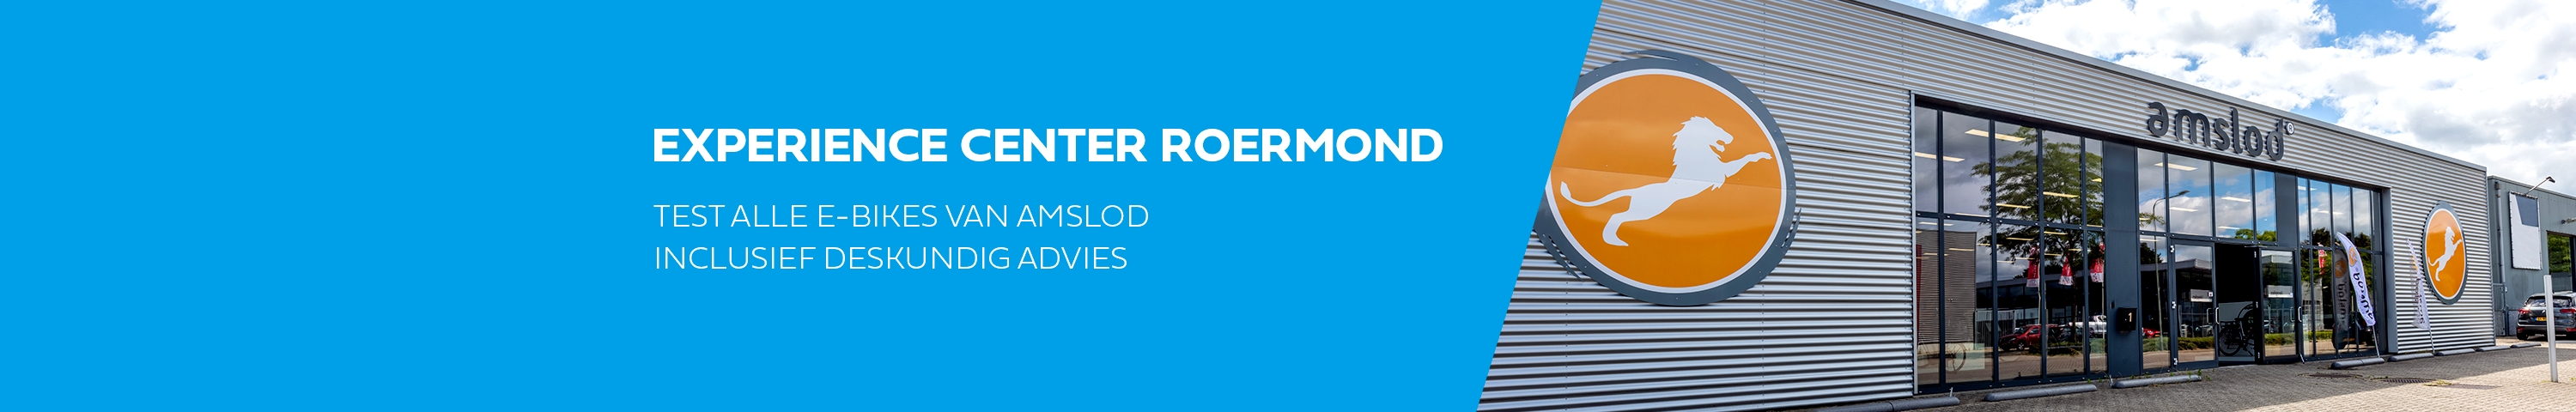 Roermond1-Hero-Desktop